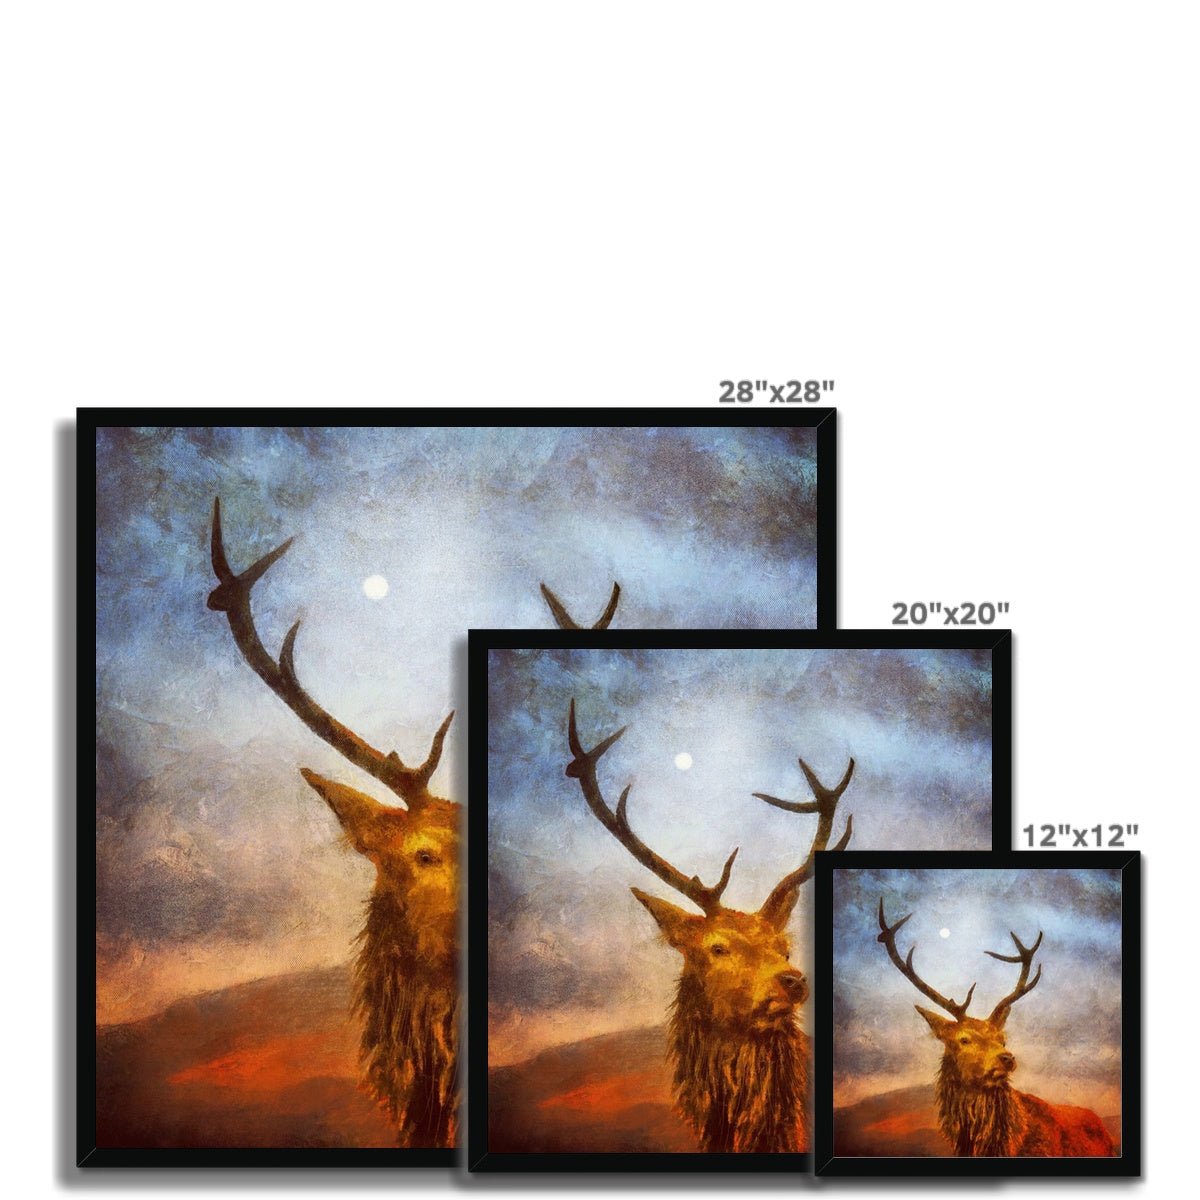 A Moonlit Highland Stag Painting | Framed Prints From Scotland-Framed Prints-Scottish Highlands & Lowlands Art Gallery-Paintings, Prints, Homeware, Art Gifts From Scotland By Scottish Artist Kevin Hunter